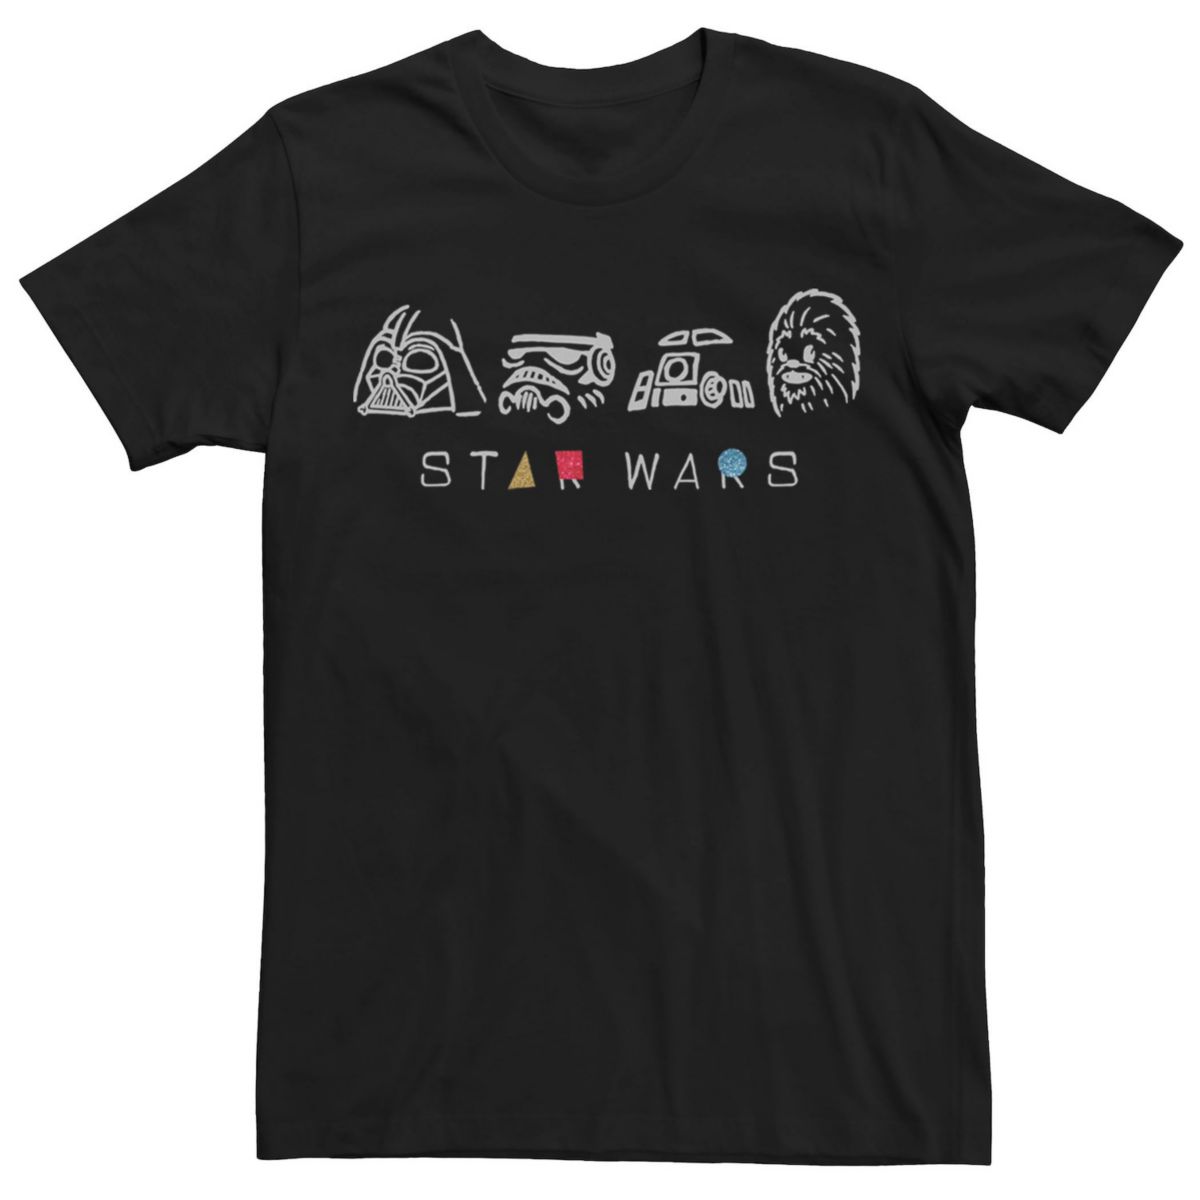 Мужская футболка с геометрическим рисунком Star Wars Group Shot Star Wars